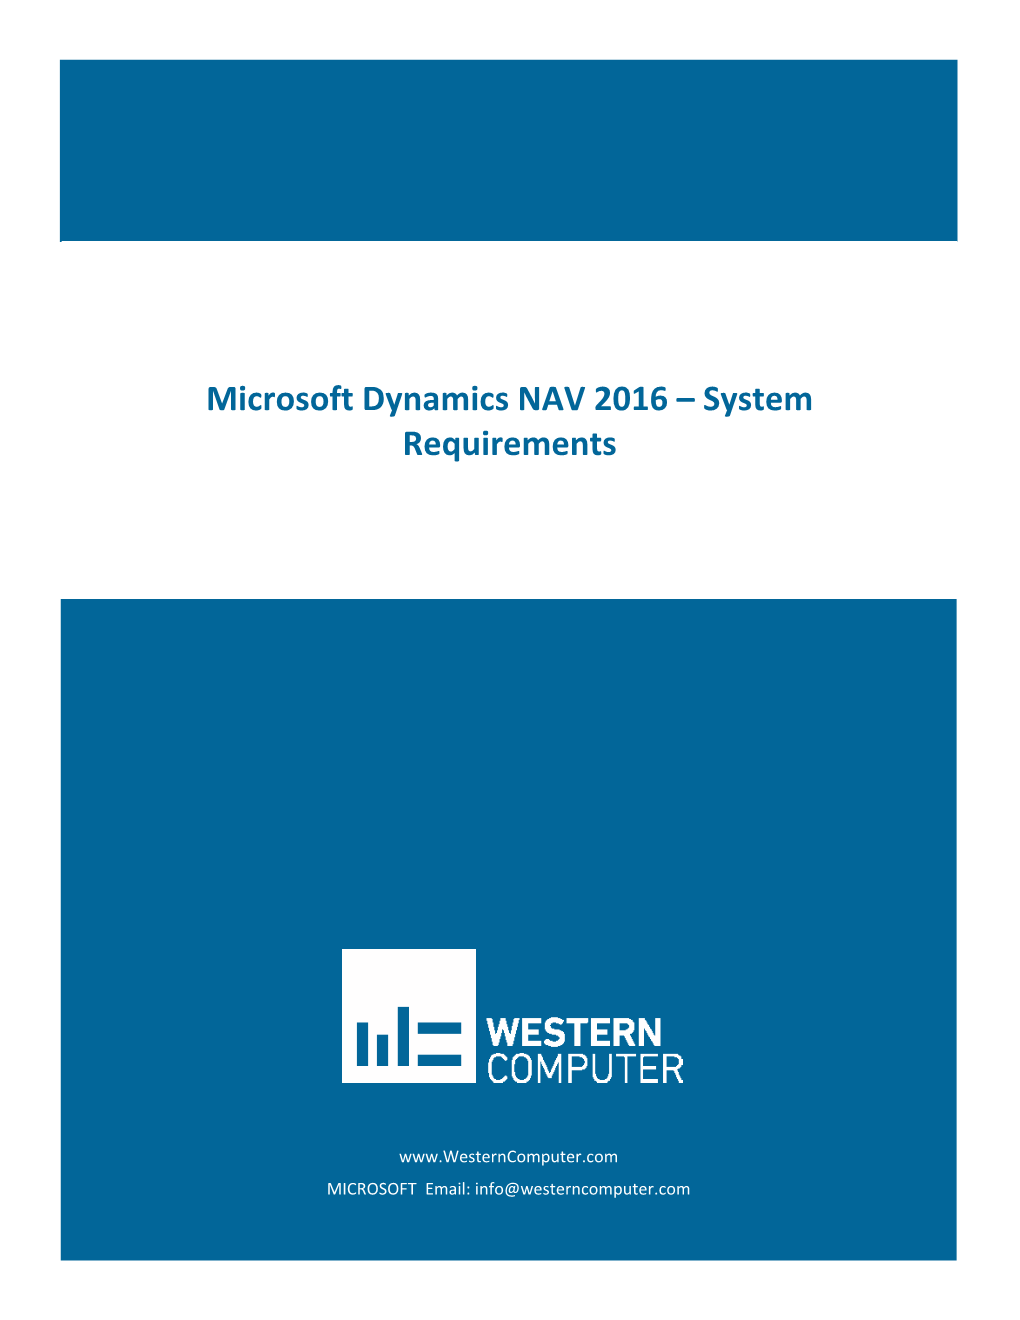 Microsoft Dynamics NAV 2016 – System Requirements